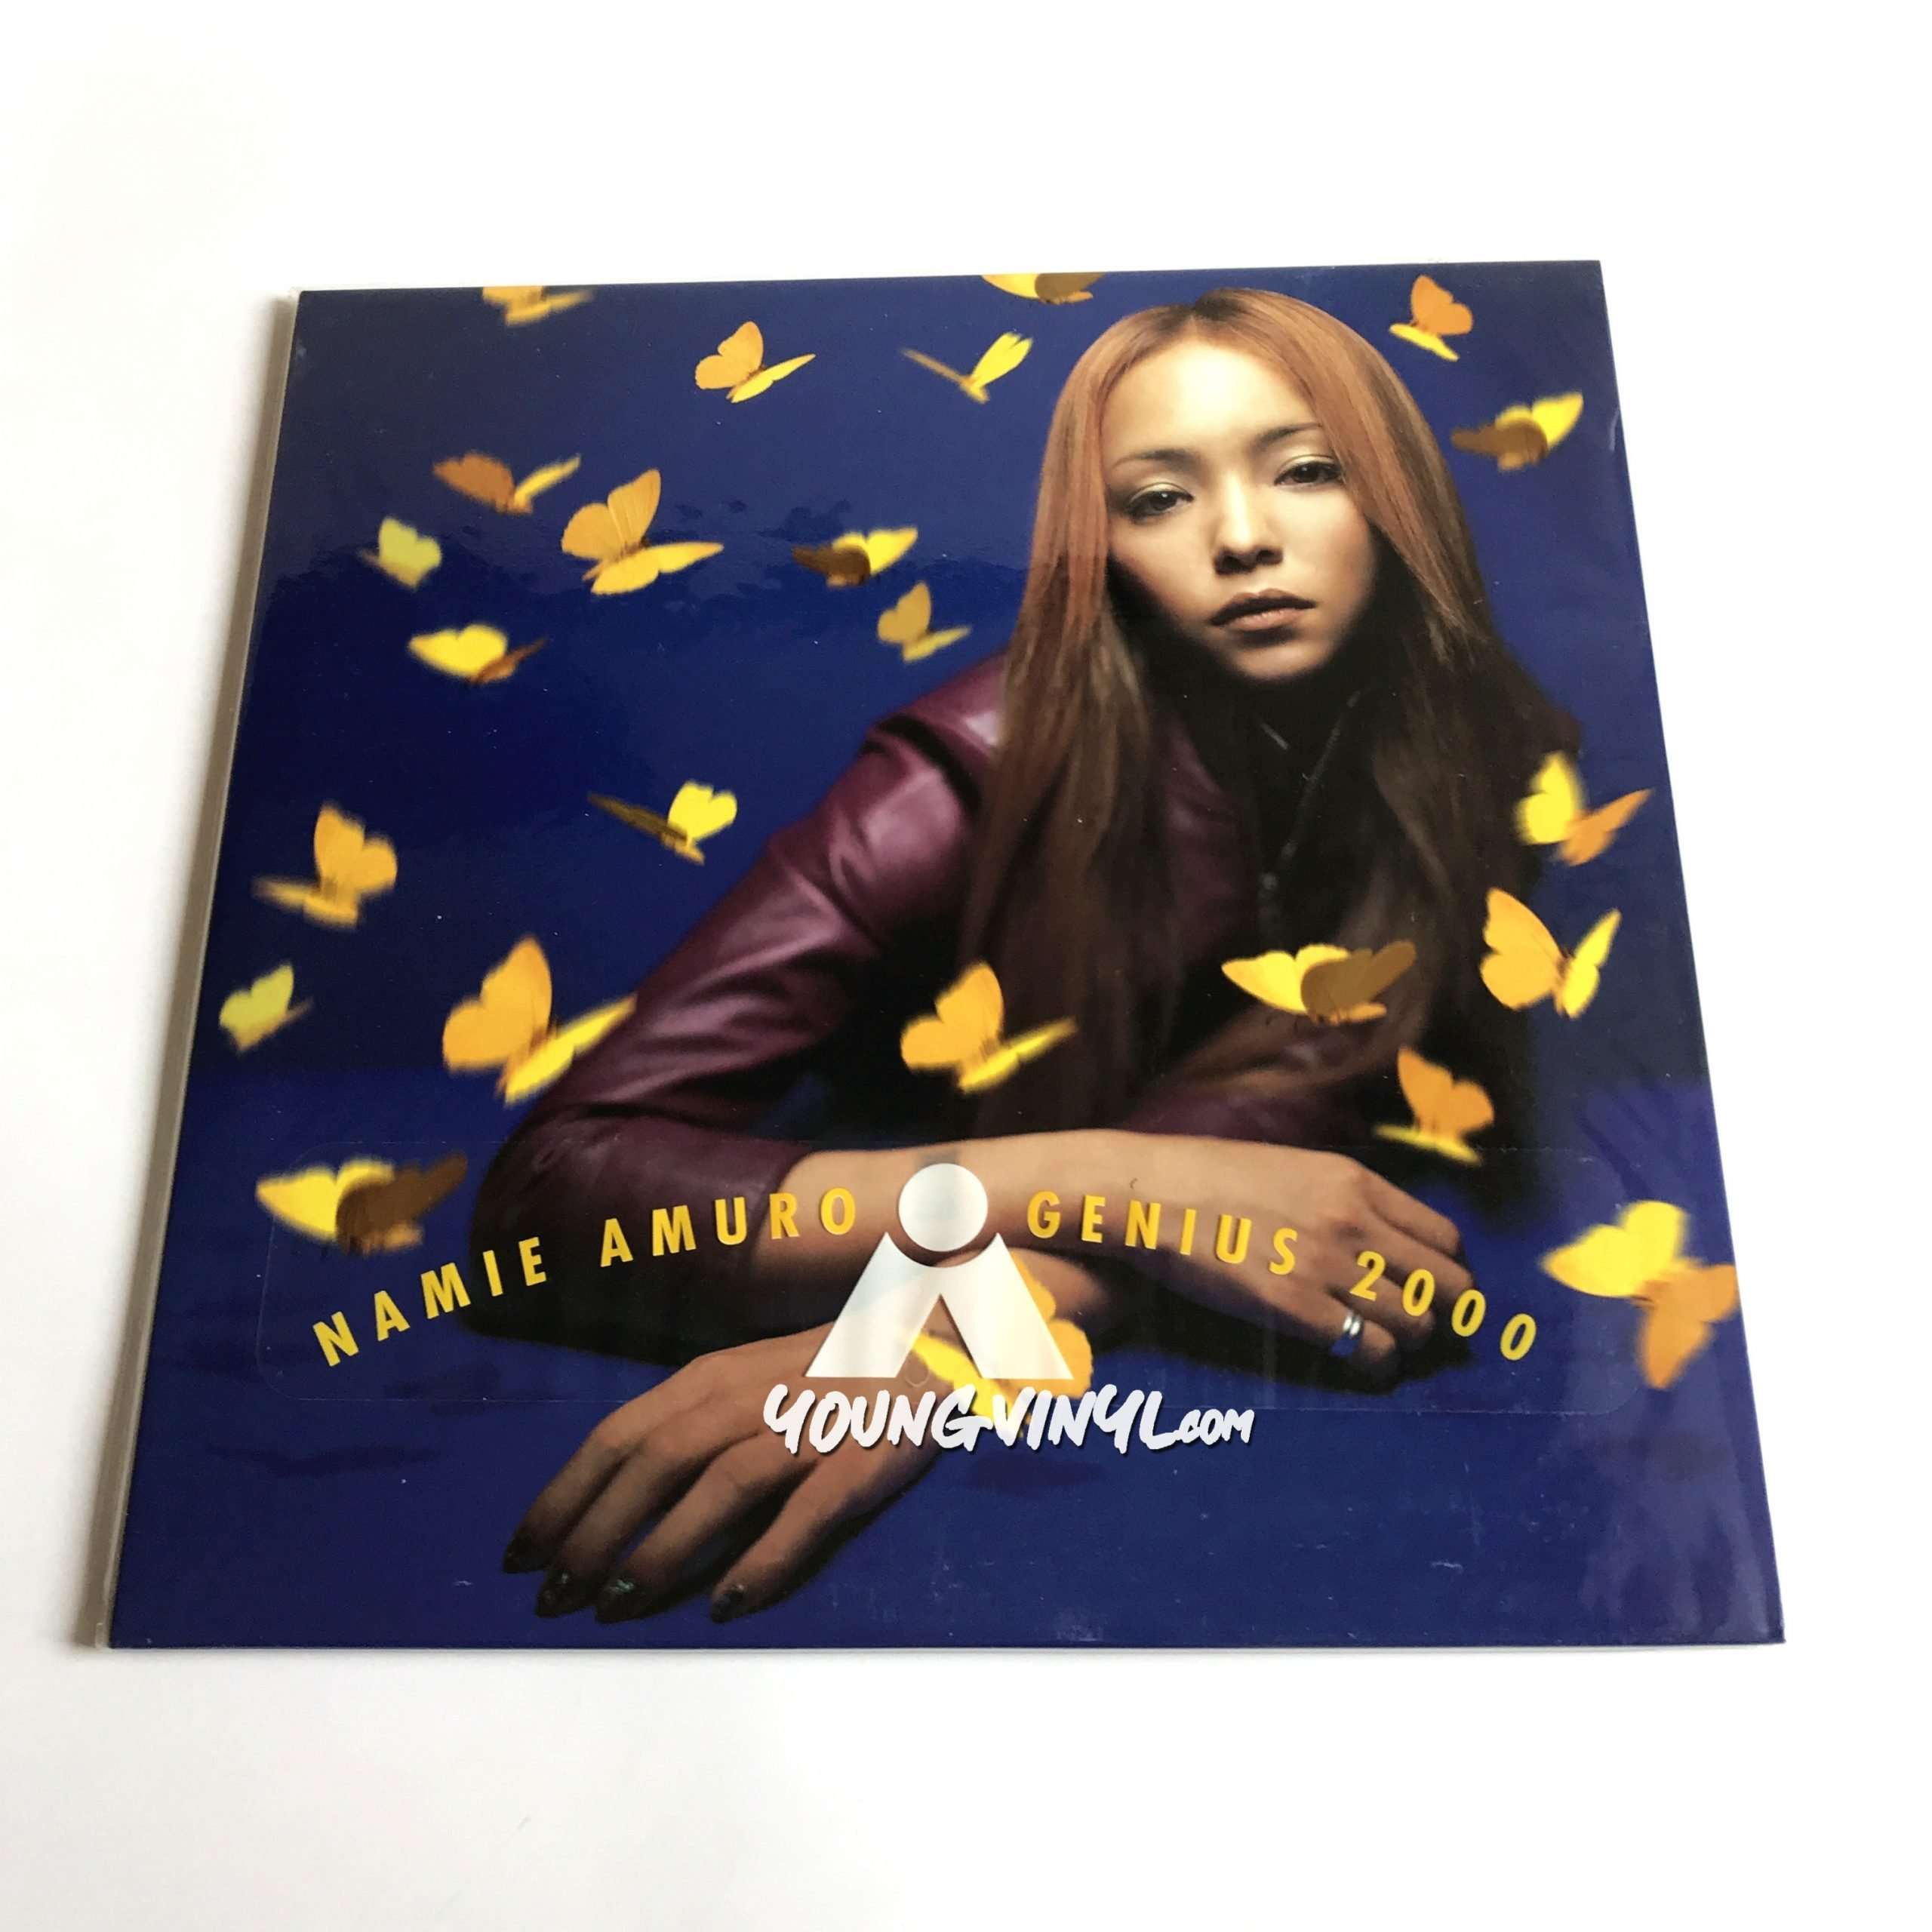 Namie Amuro Genius 2000 Vinyl 安室奈美恵 - Young Vinyl